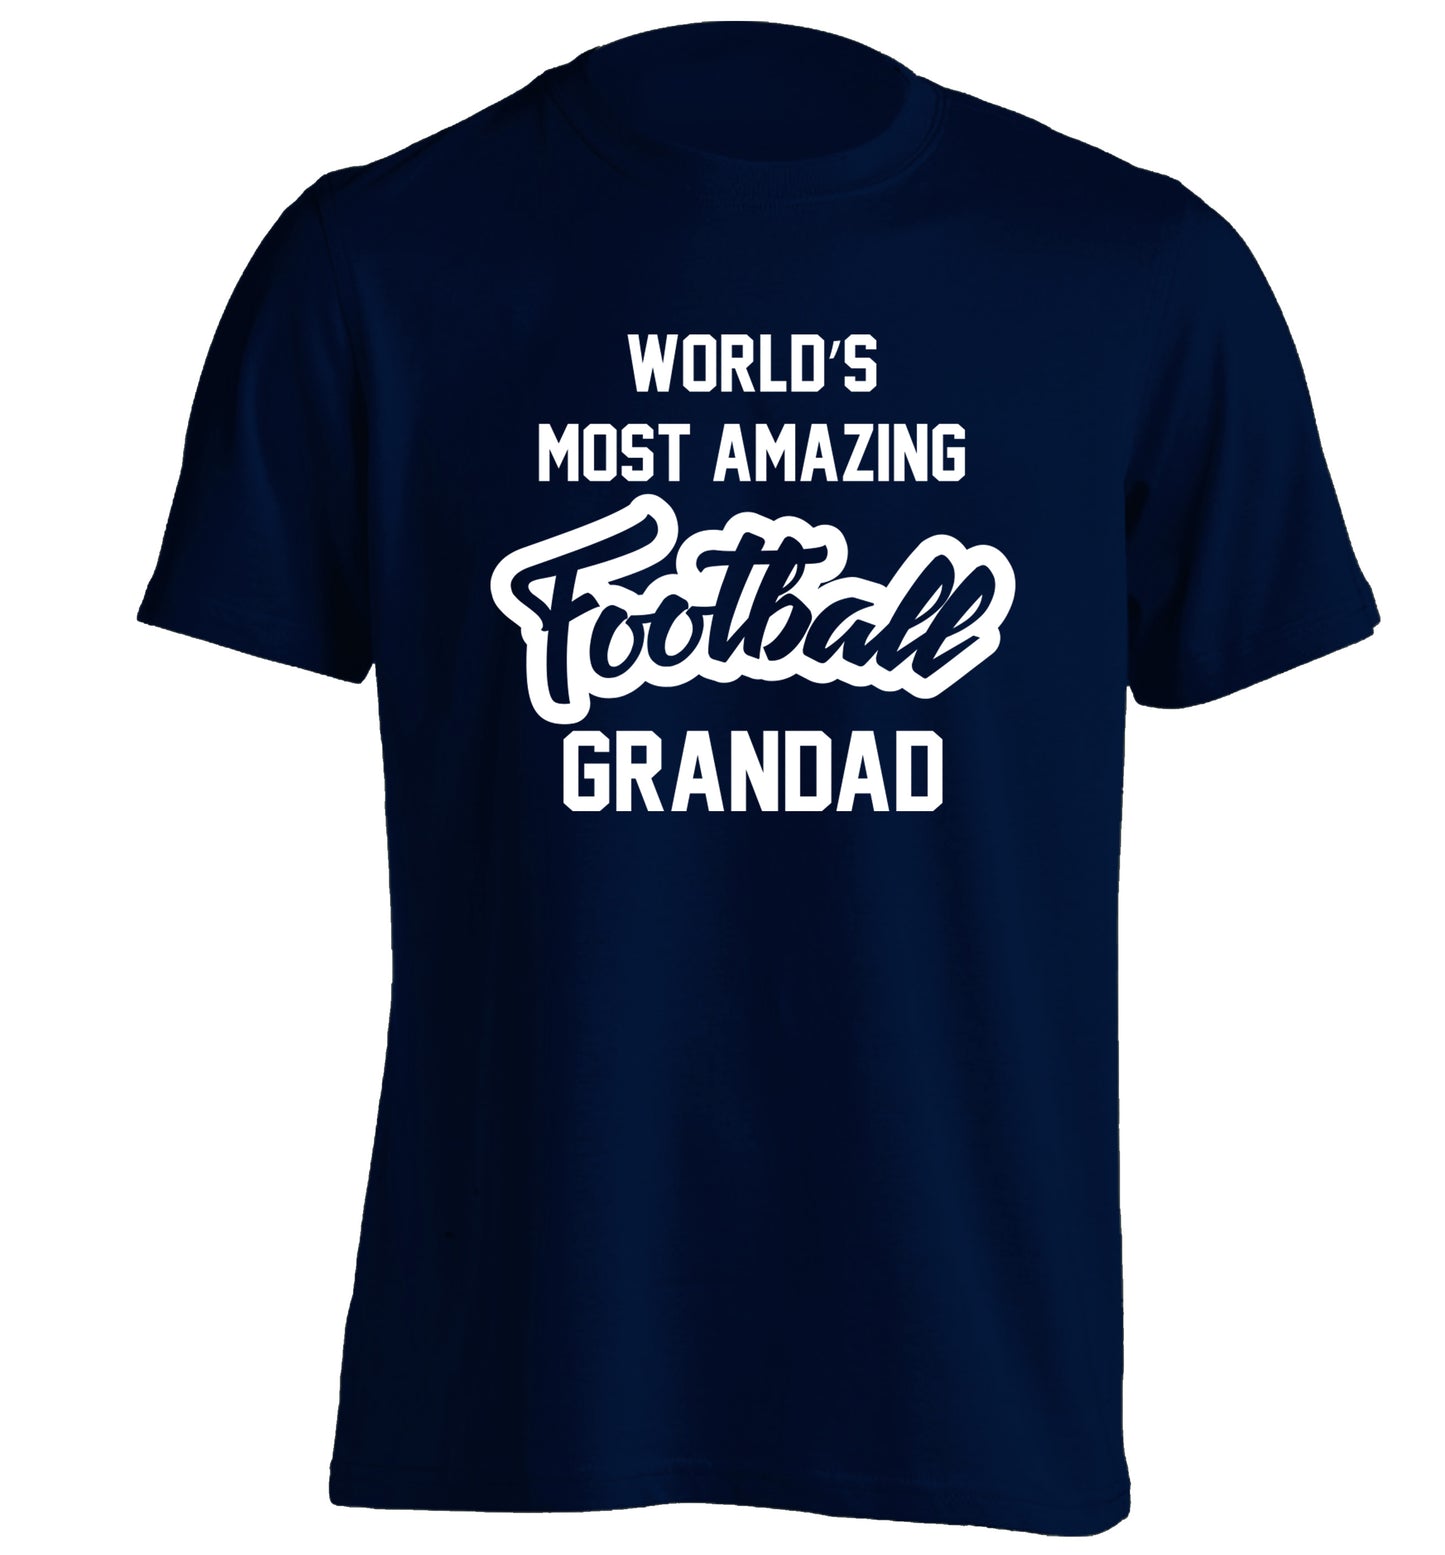 Worlds most amazing football grandad adults unisexnavy Tshirt 2XL